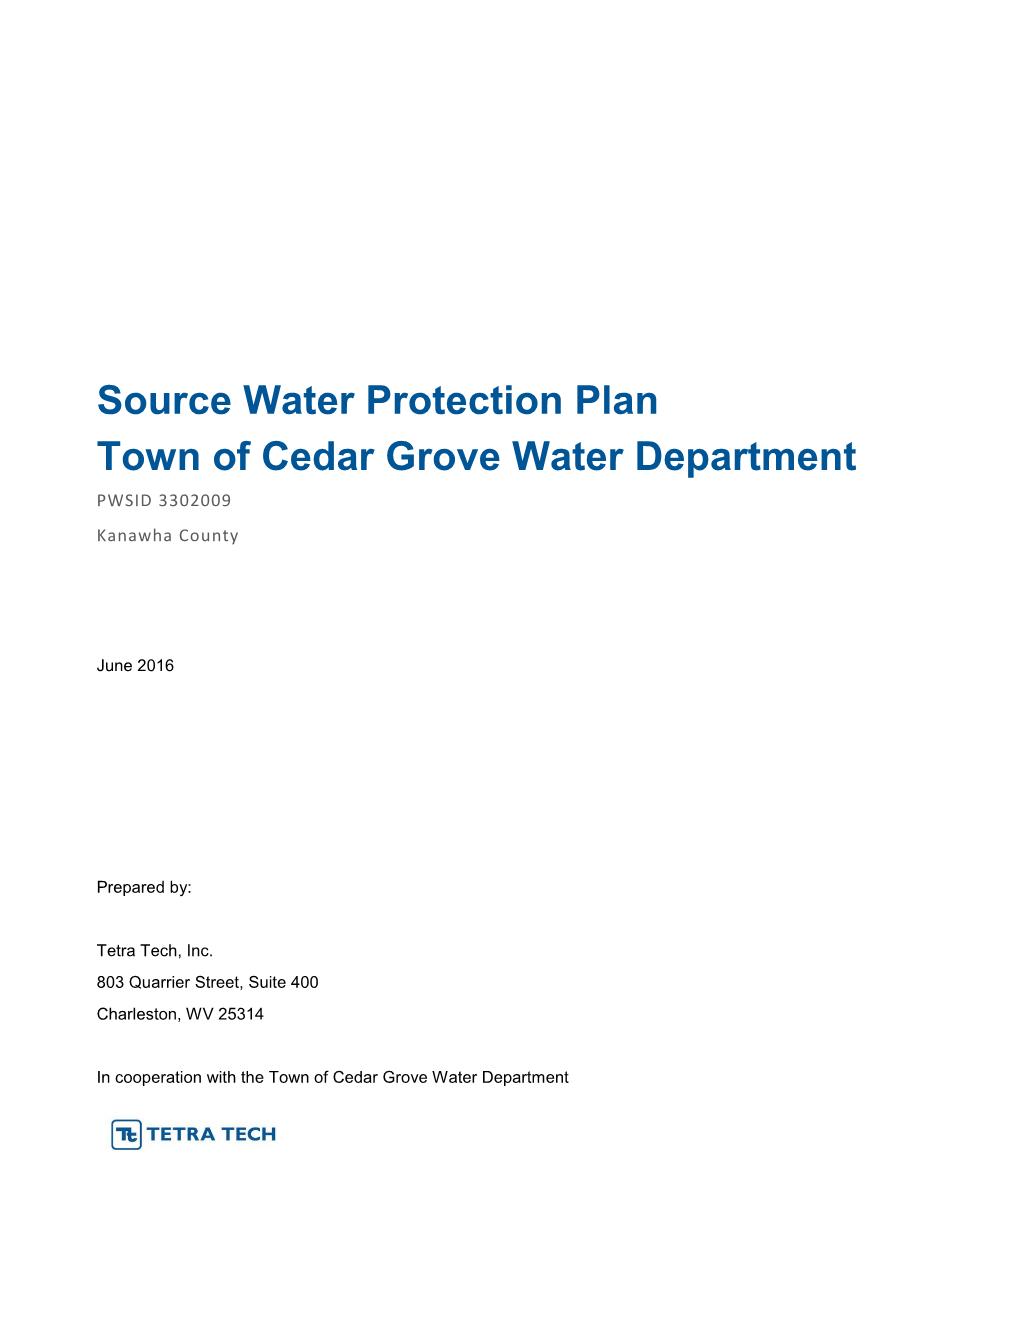 Cedar Grove Source Water Protection Plan